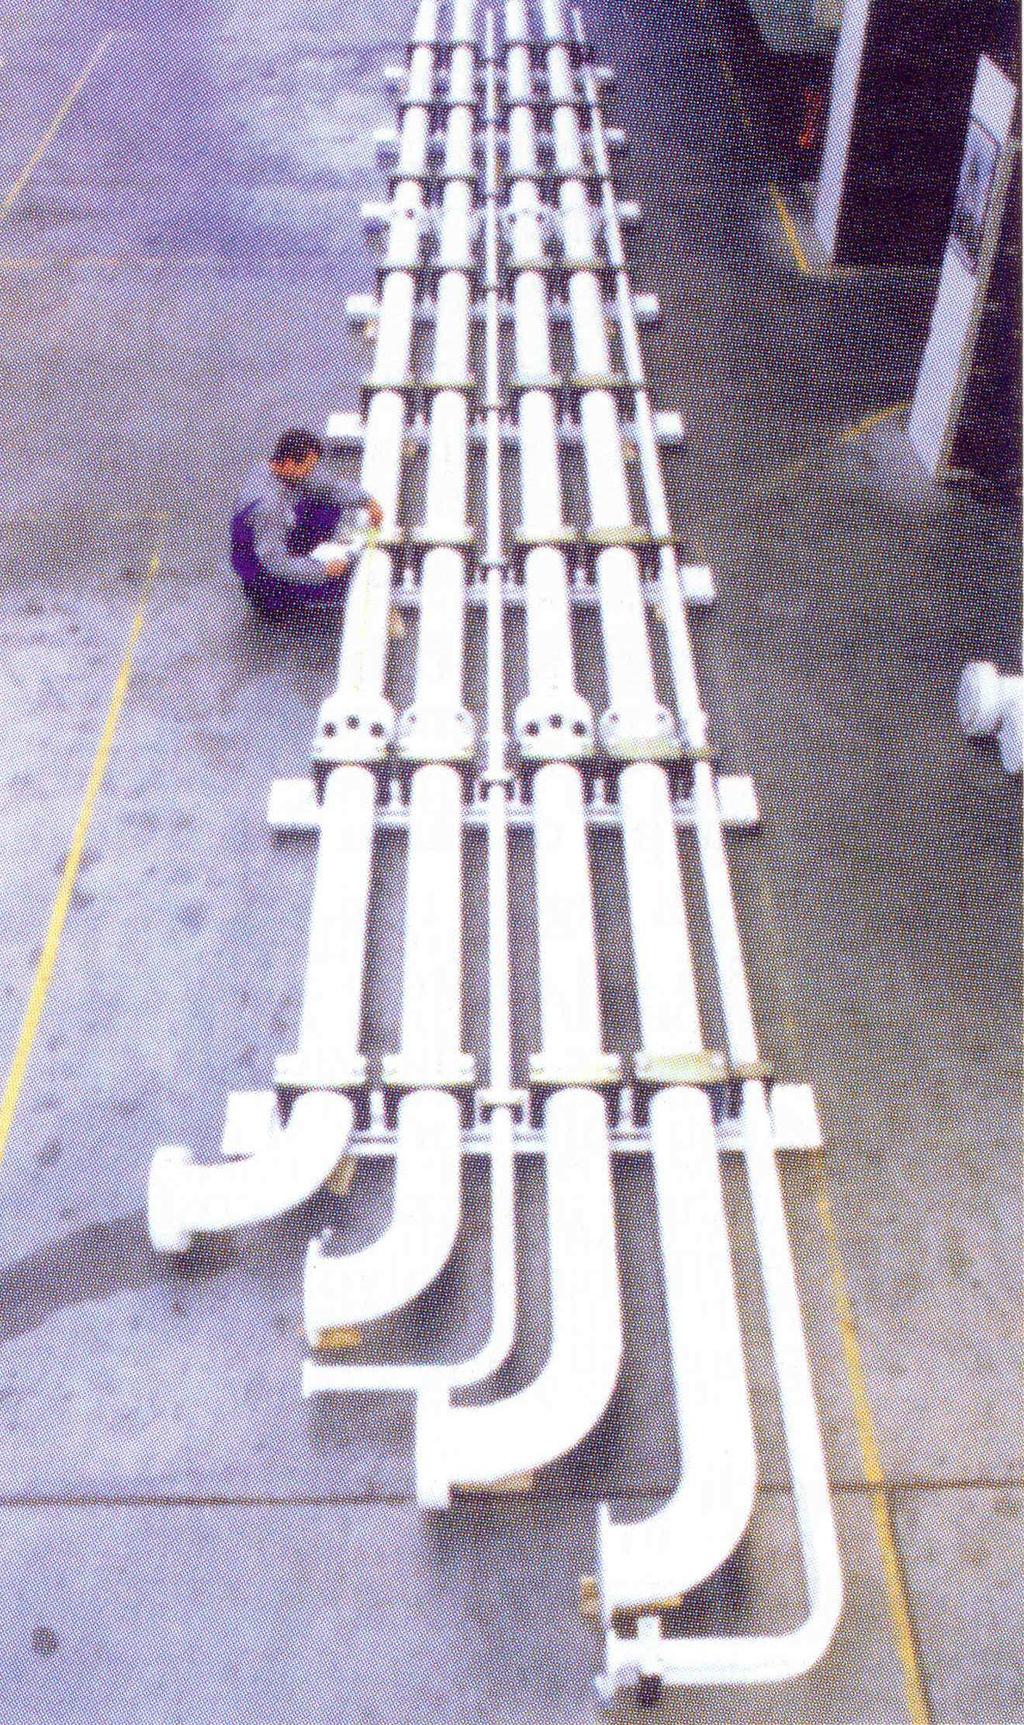 Piping tubi raccordi flange materiali per tubi acciai normali non saldati